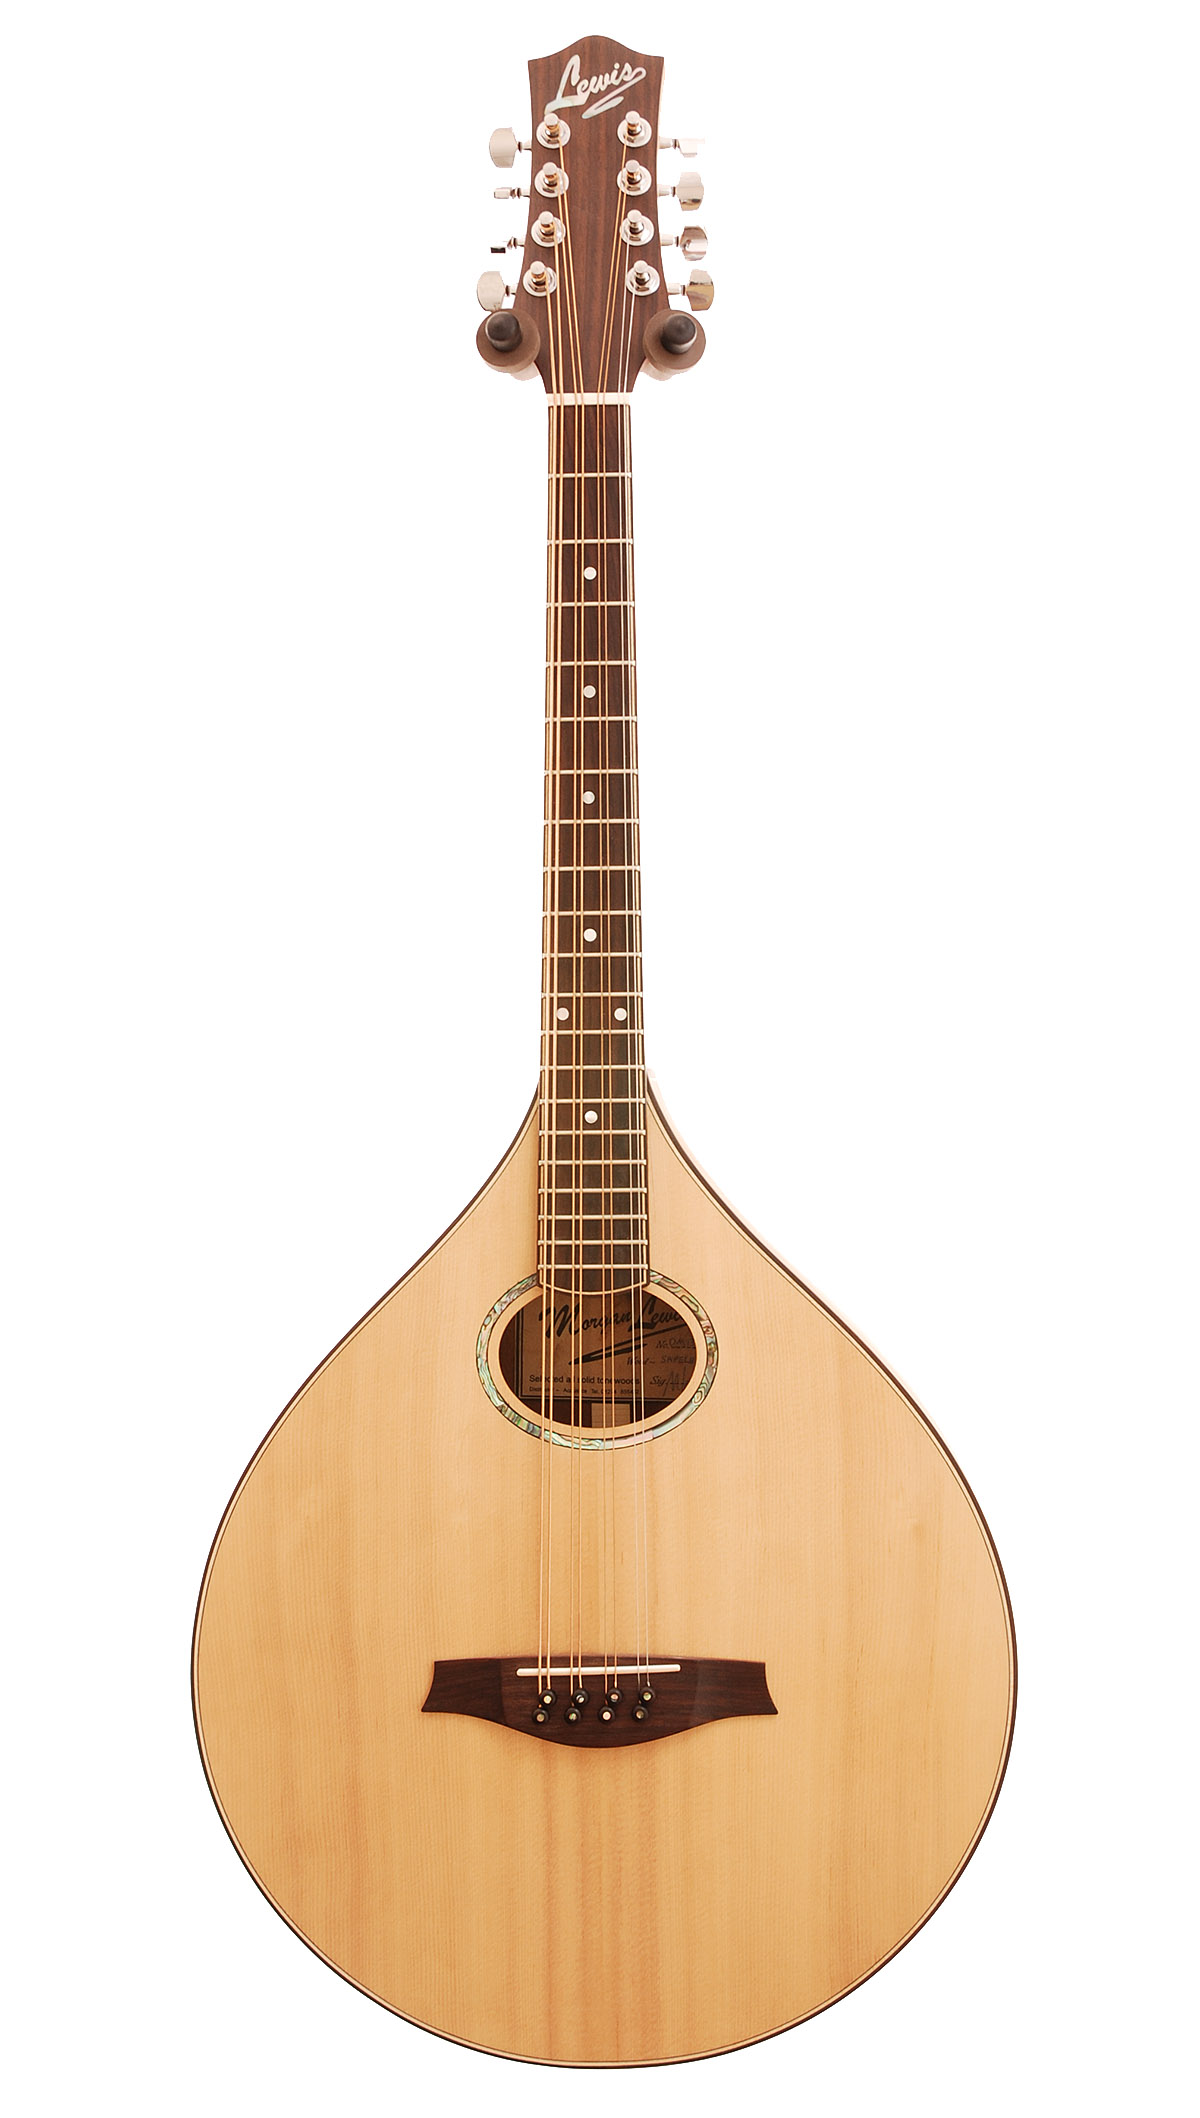 mandola italian stringed instruments